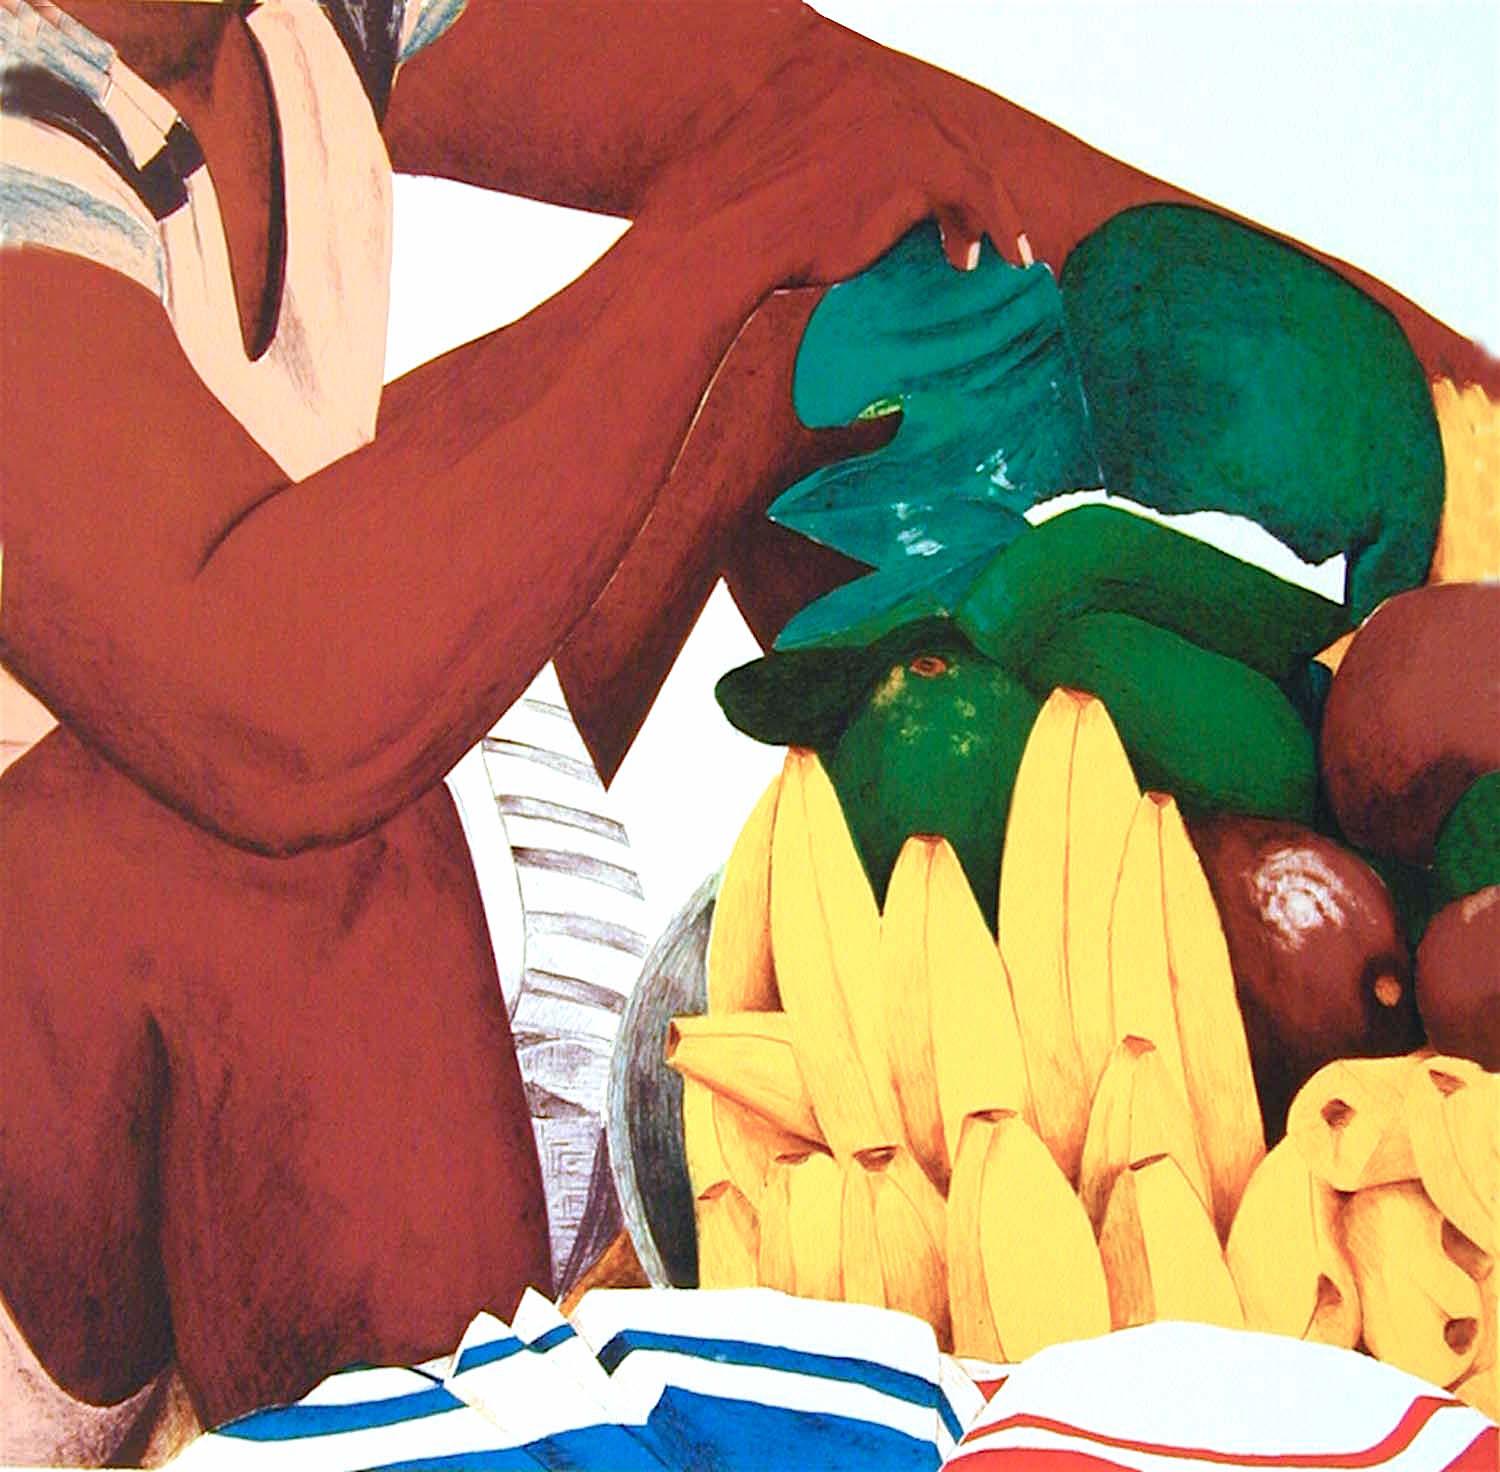 BAZURTO Cartagena Market, Signed Lithograph, Bananas, Avocados, Latin American  - Print by Ana Mercedes Hoyos